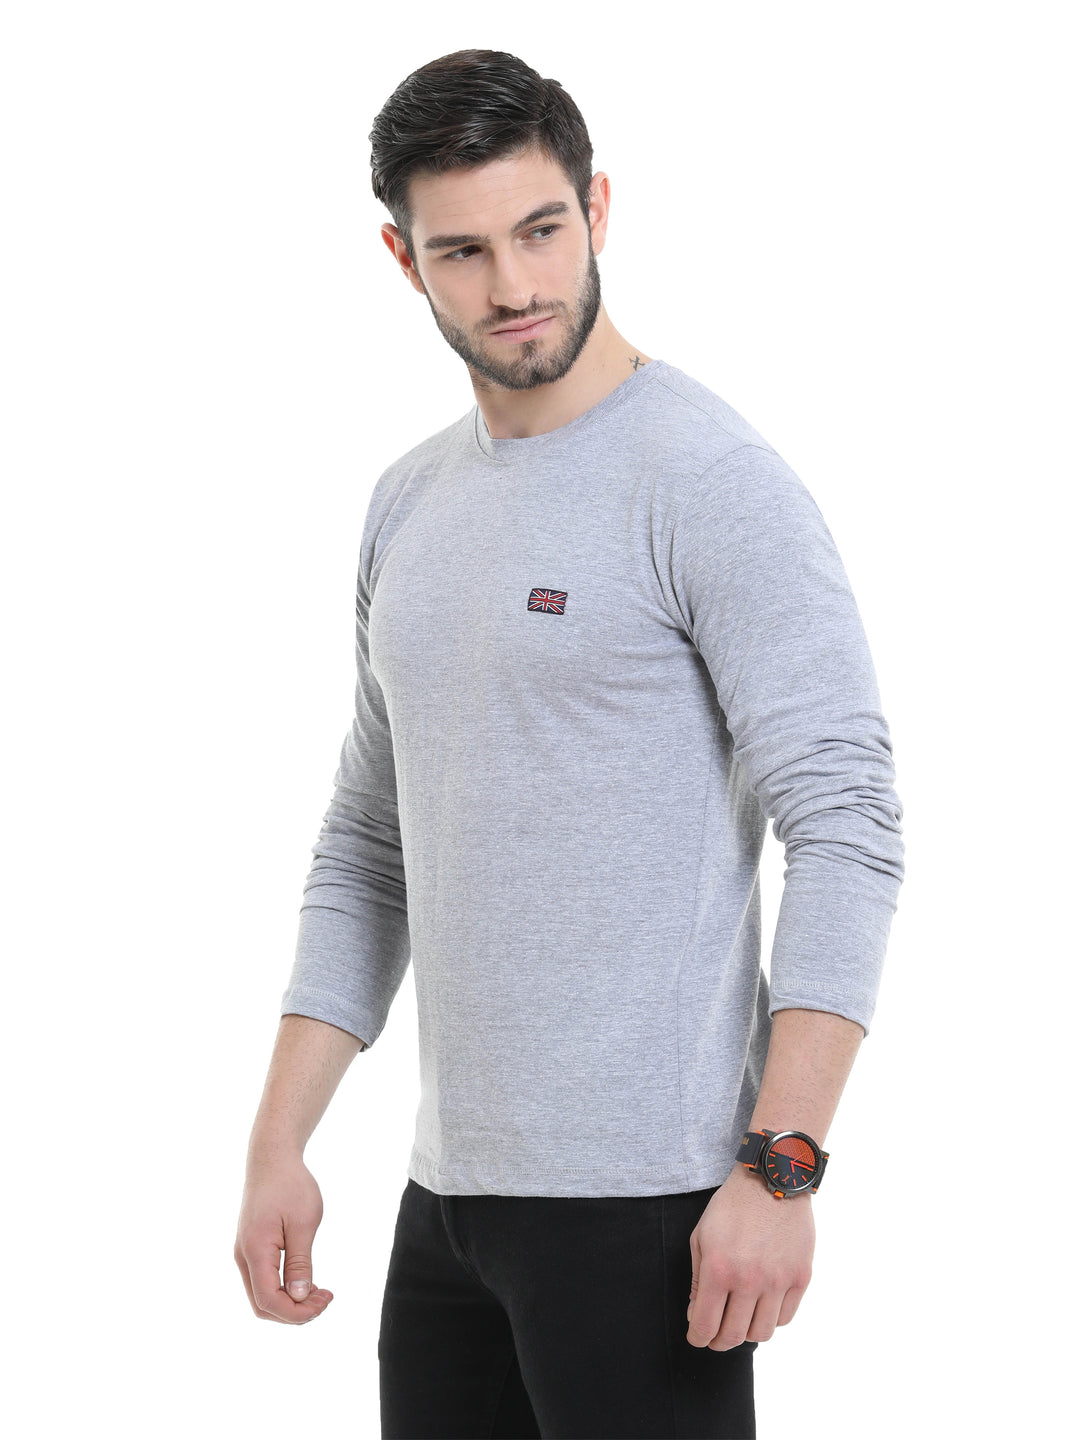 BU 09 Long Sleeve T-Shirt (Grey Melange)